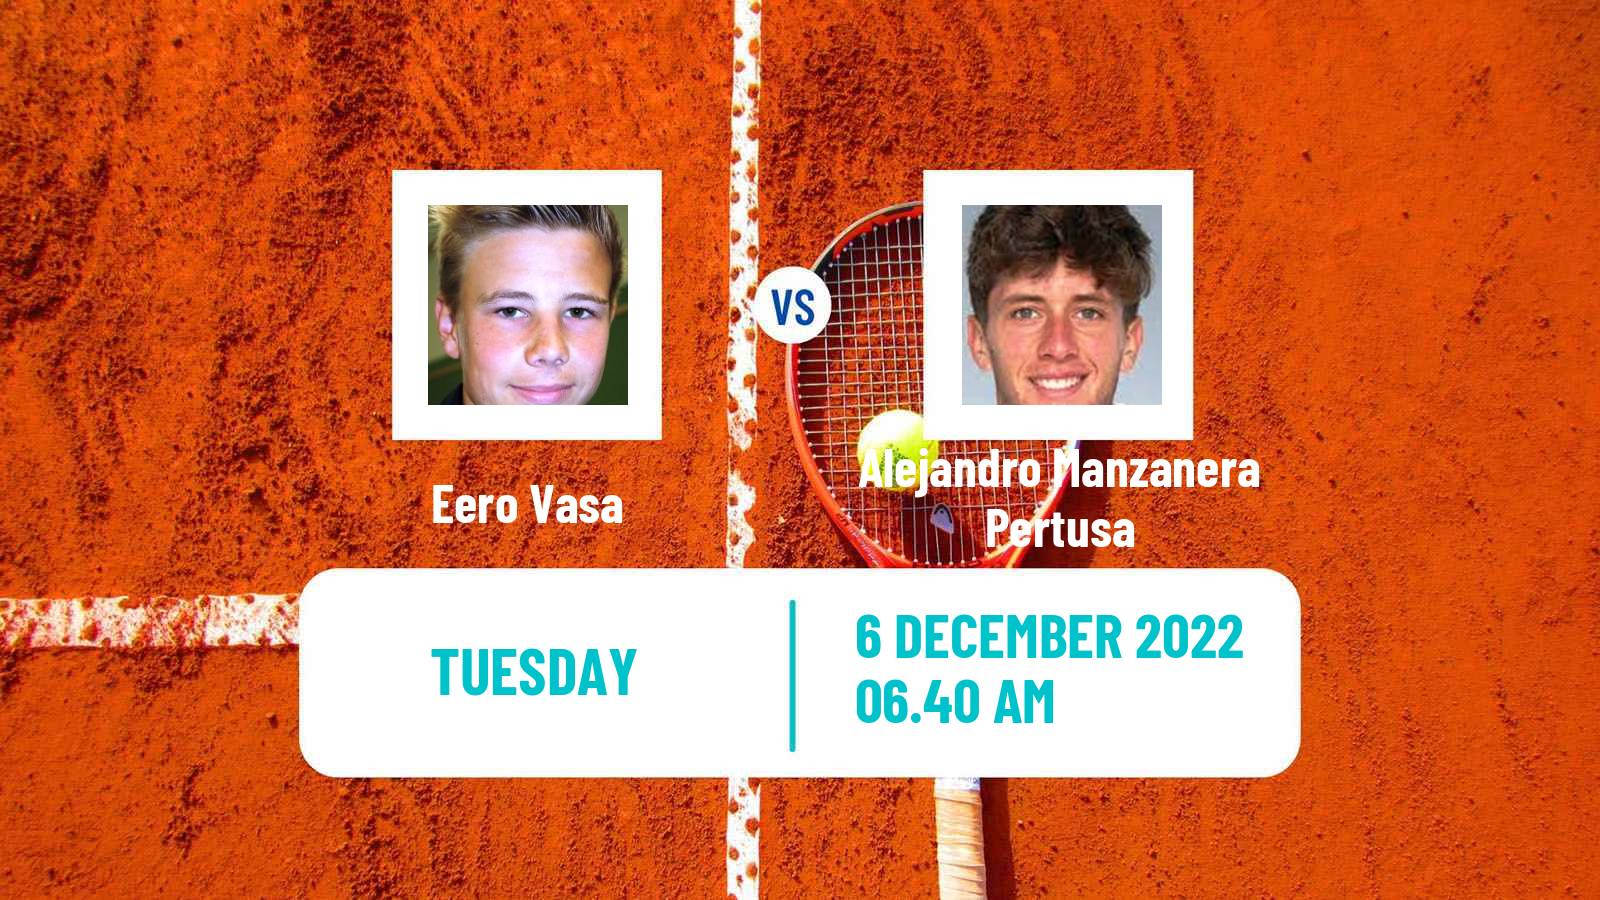 Tennis ITF Tournaments Eero Vasa - Alejandro Manzanera Pertusa